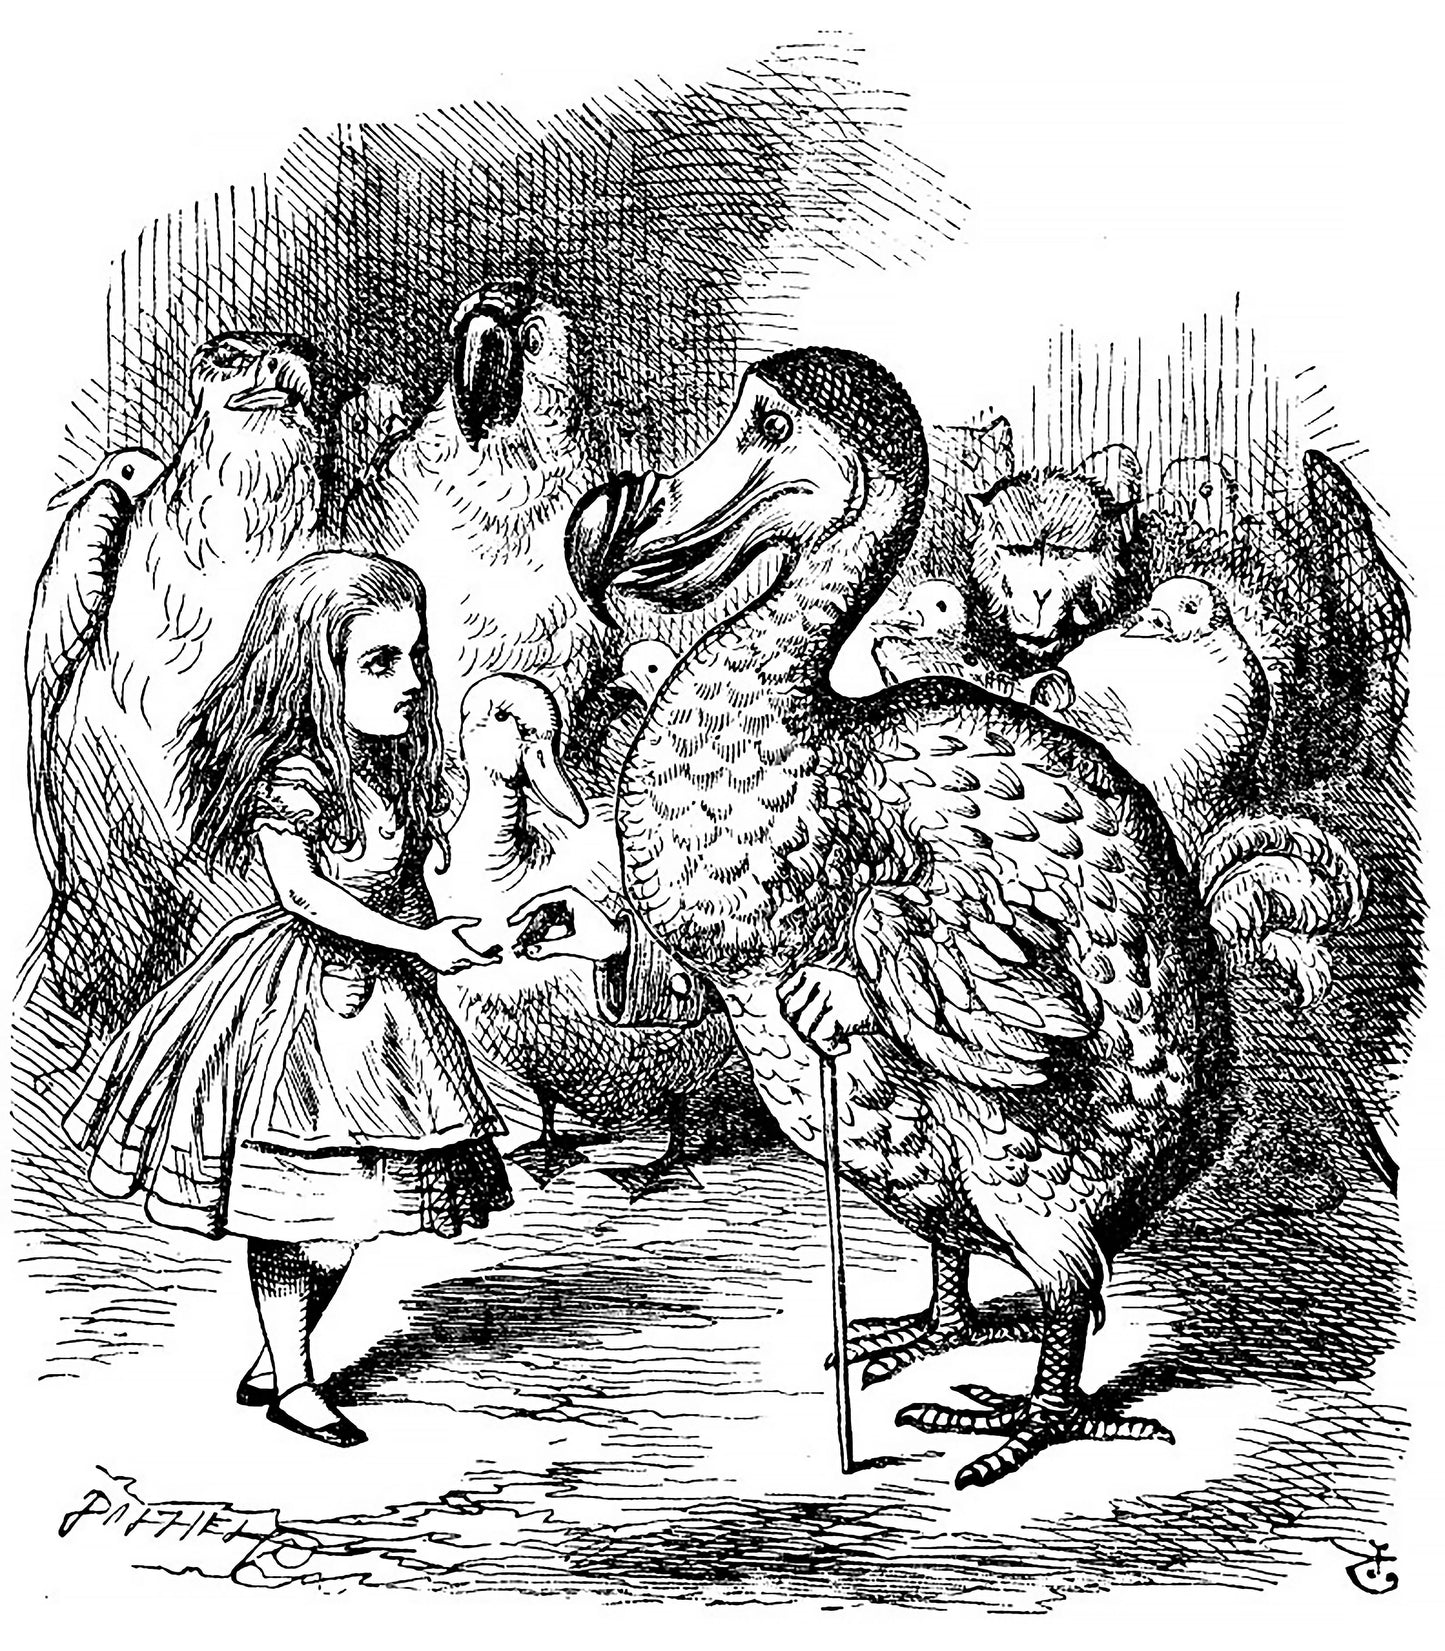 Alice in Wonderland Black & White Illustrations [42 Images]